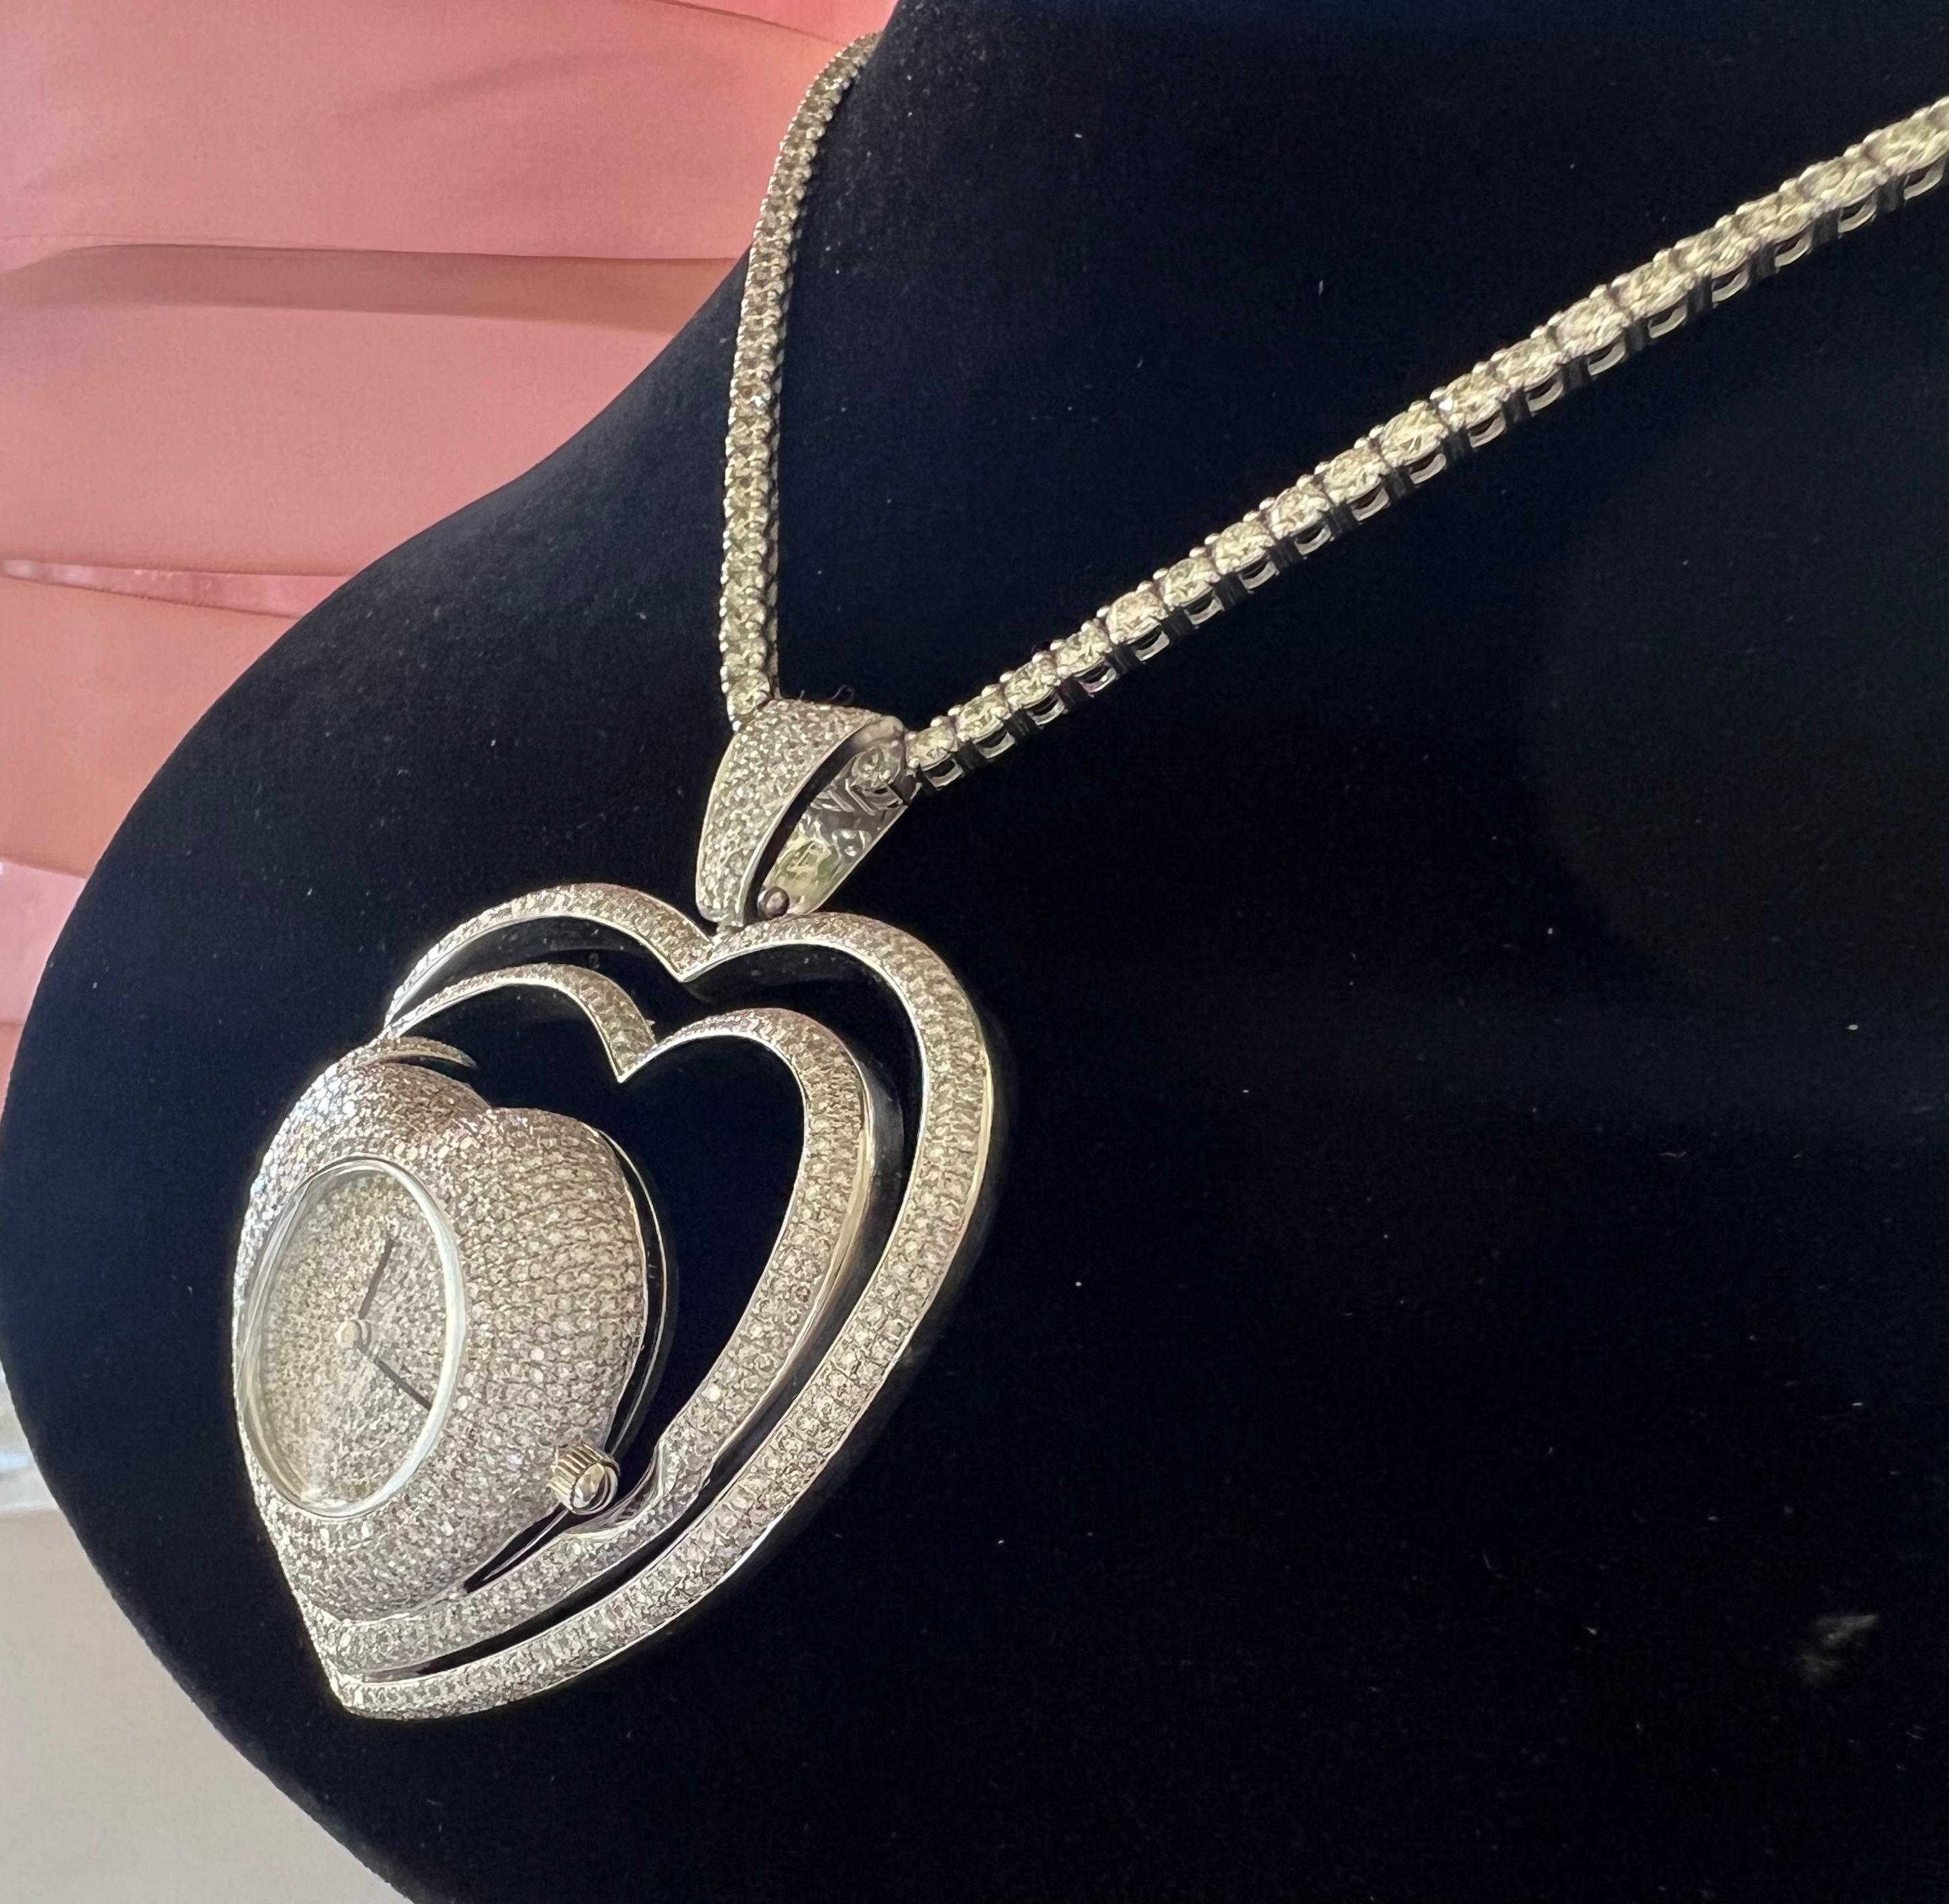 24.50 Carat Pave Diamond Heart Shaped Watch Pendant Necklace on Diamond Chain 6